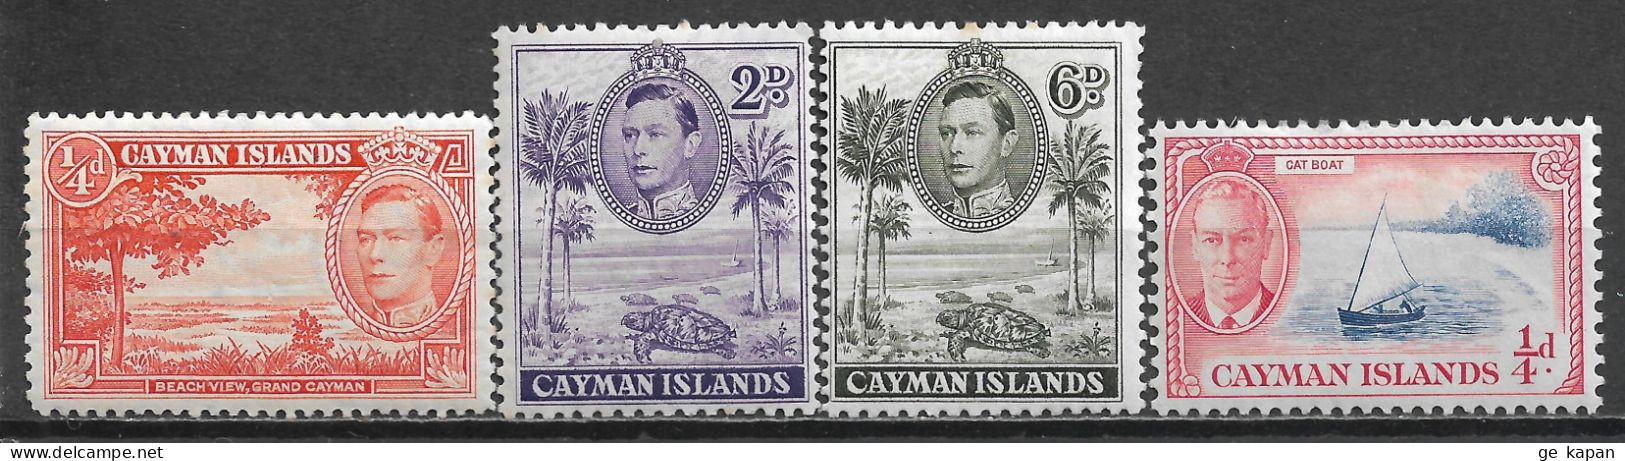 1938-1950 CAYMAN ISLANDS Set Of 4 MLH STAMPS (Michel # 101A,105A,110b,123) - Cayman Islands